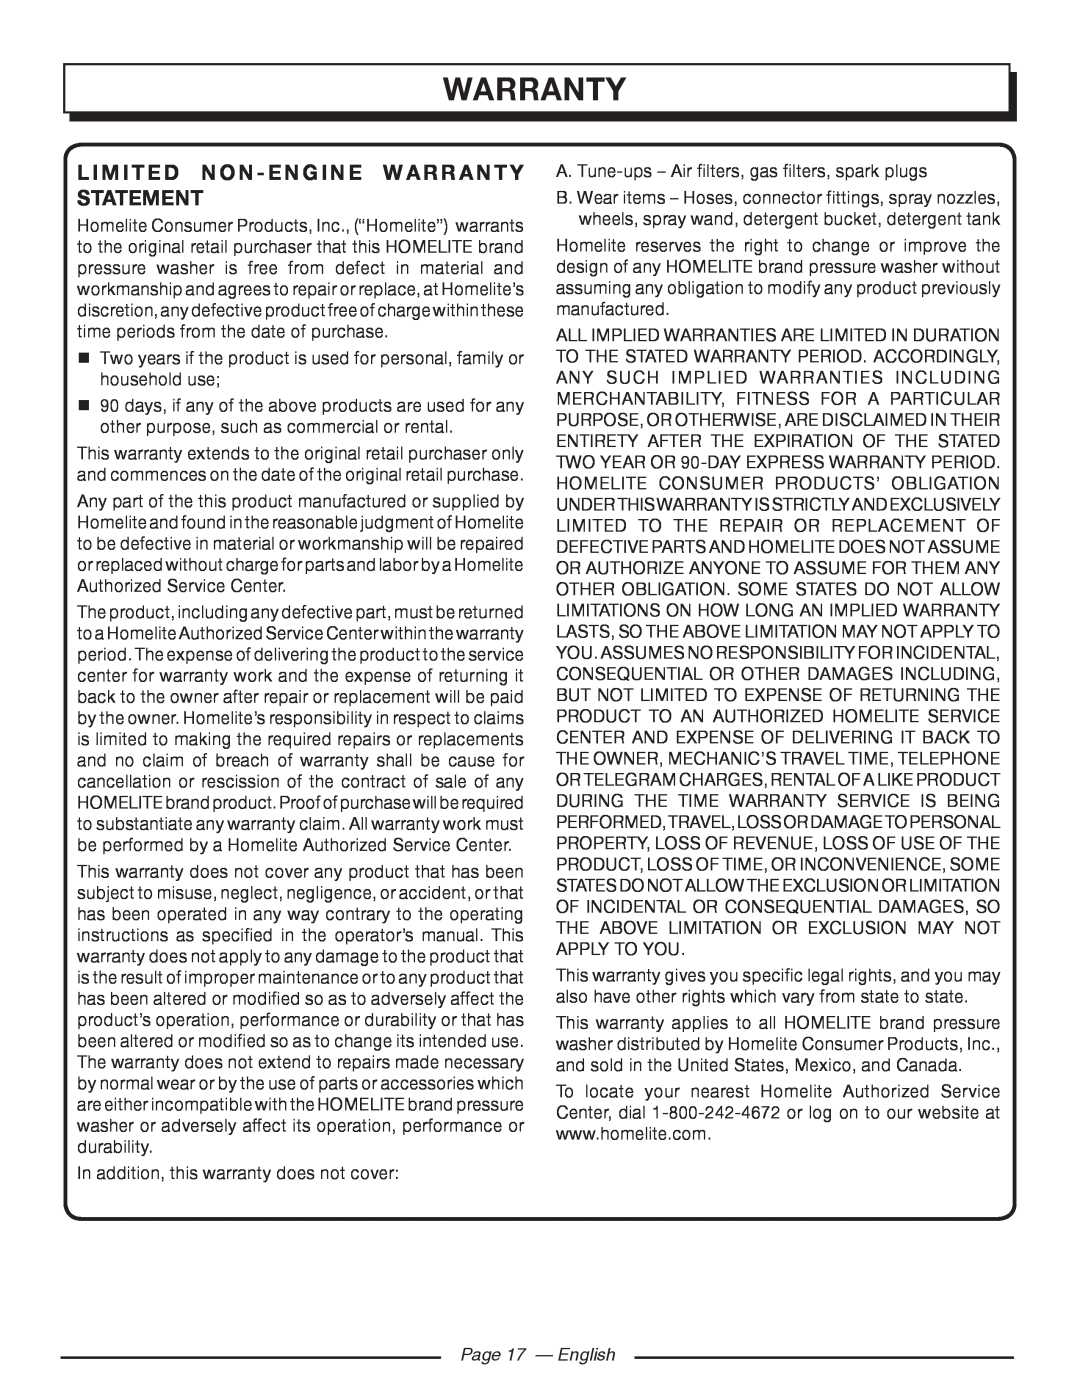 Homelite UT80516 manuel dutilisation Limited Non - Engine Warranty Statement, Page 17 - English 